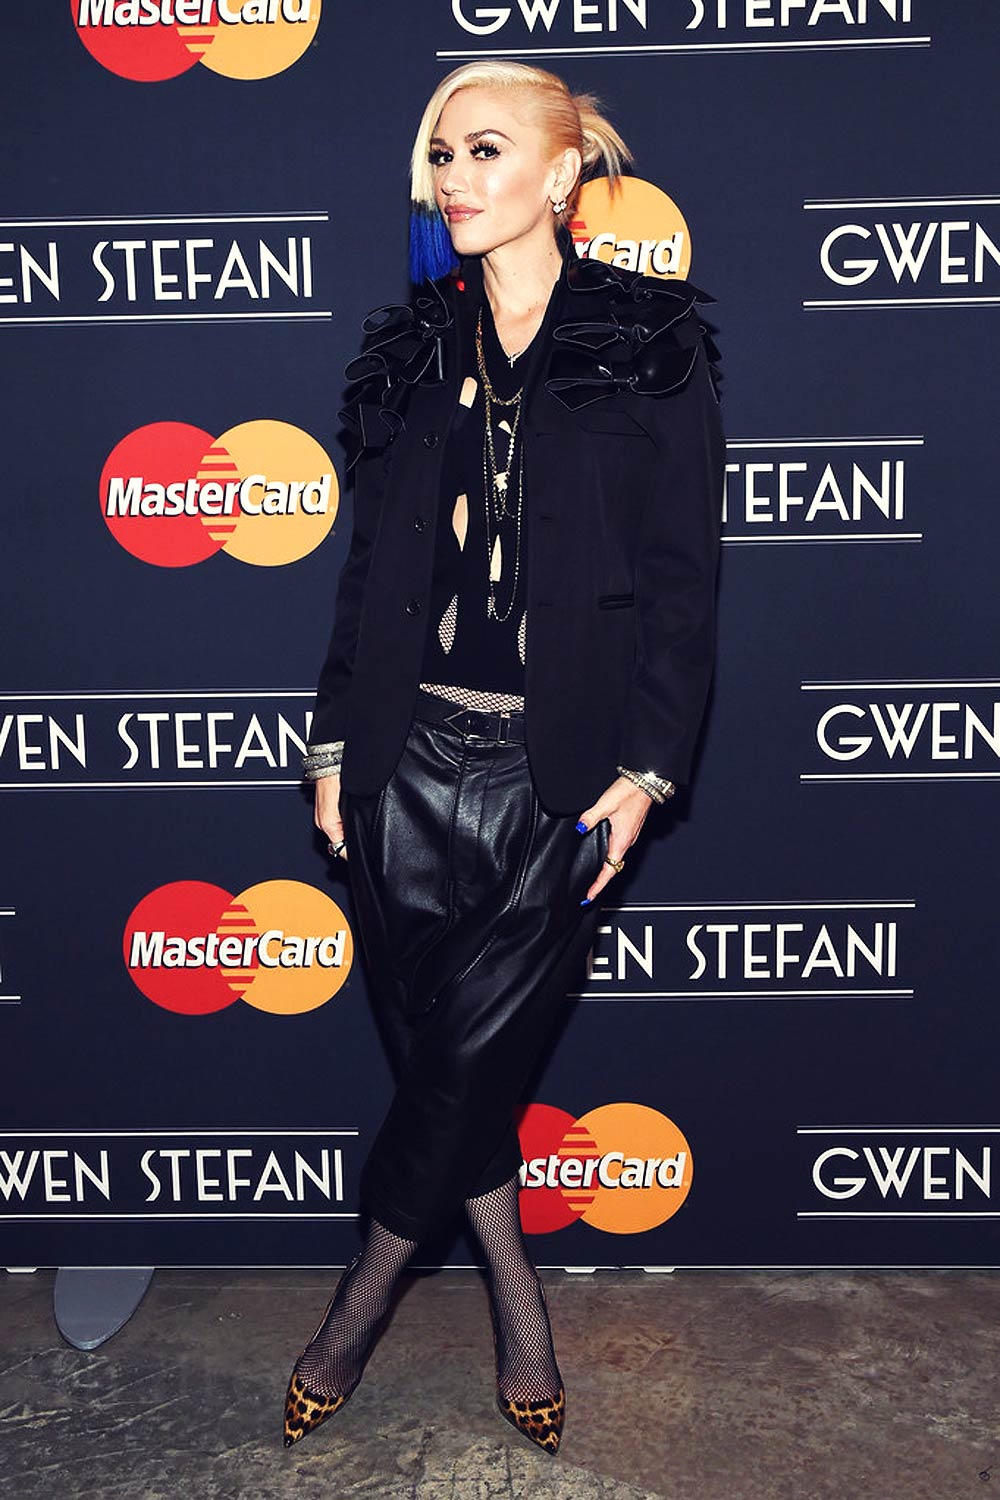 Gwen Stefani poses before a concert